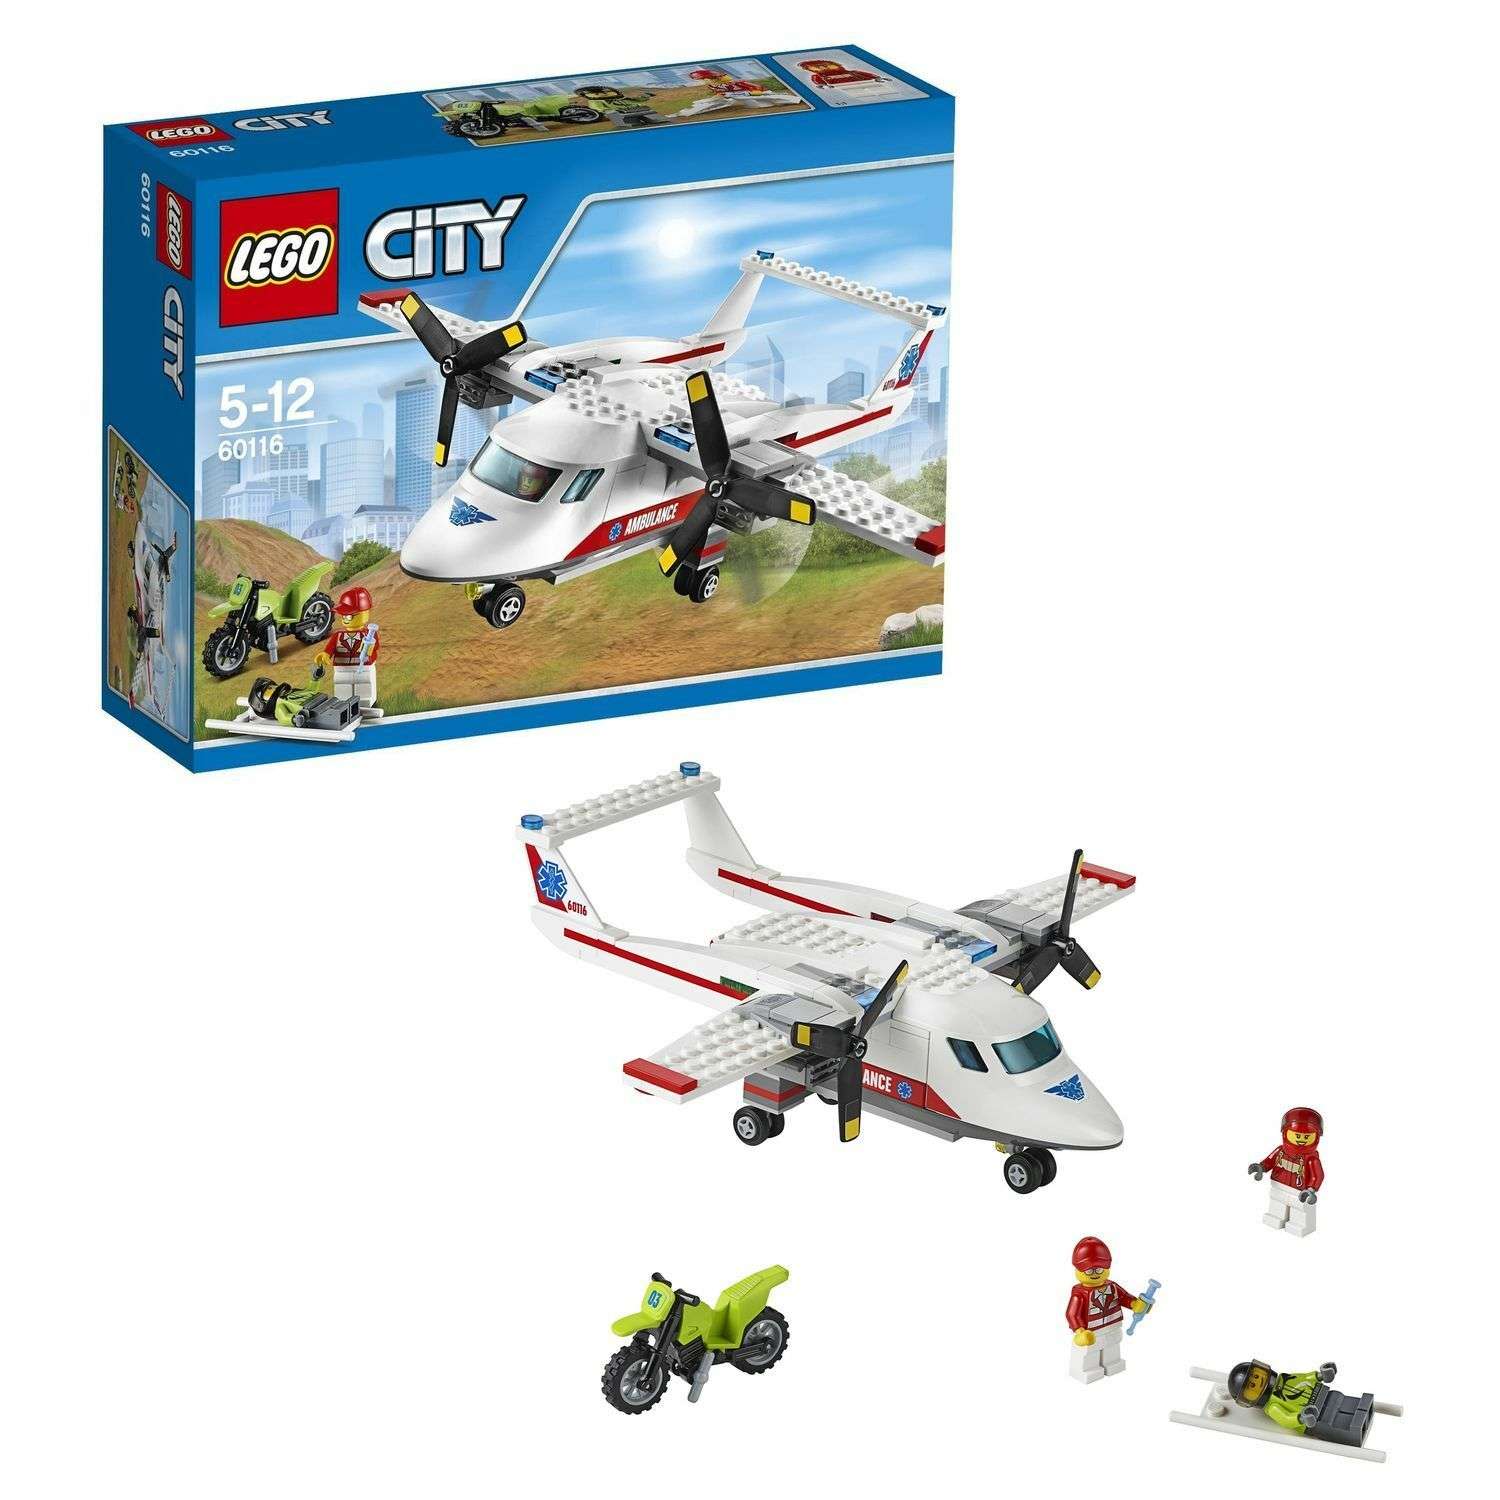 Конструктор LEGO City Great Vehicles Самолет скорой помощи (60116) - фото 1